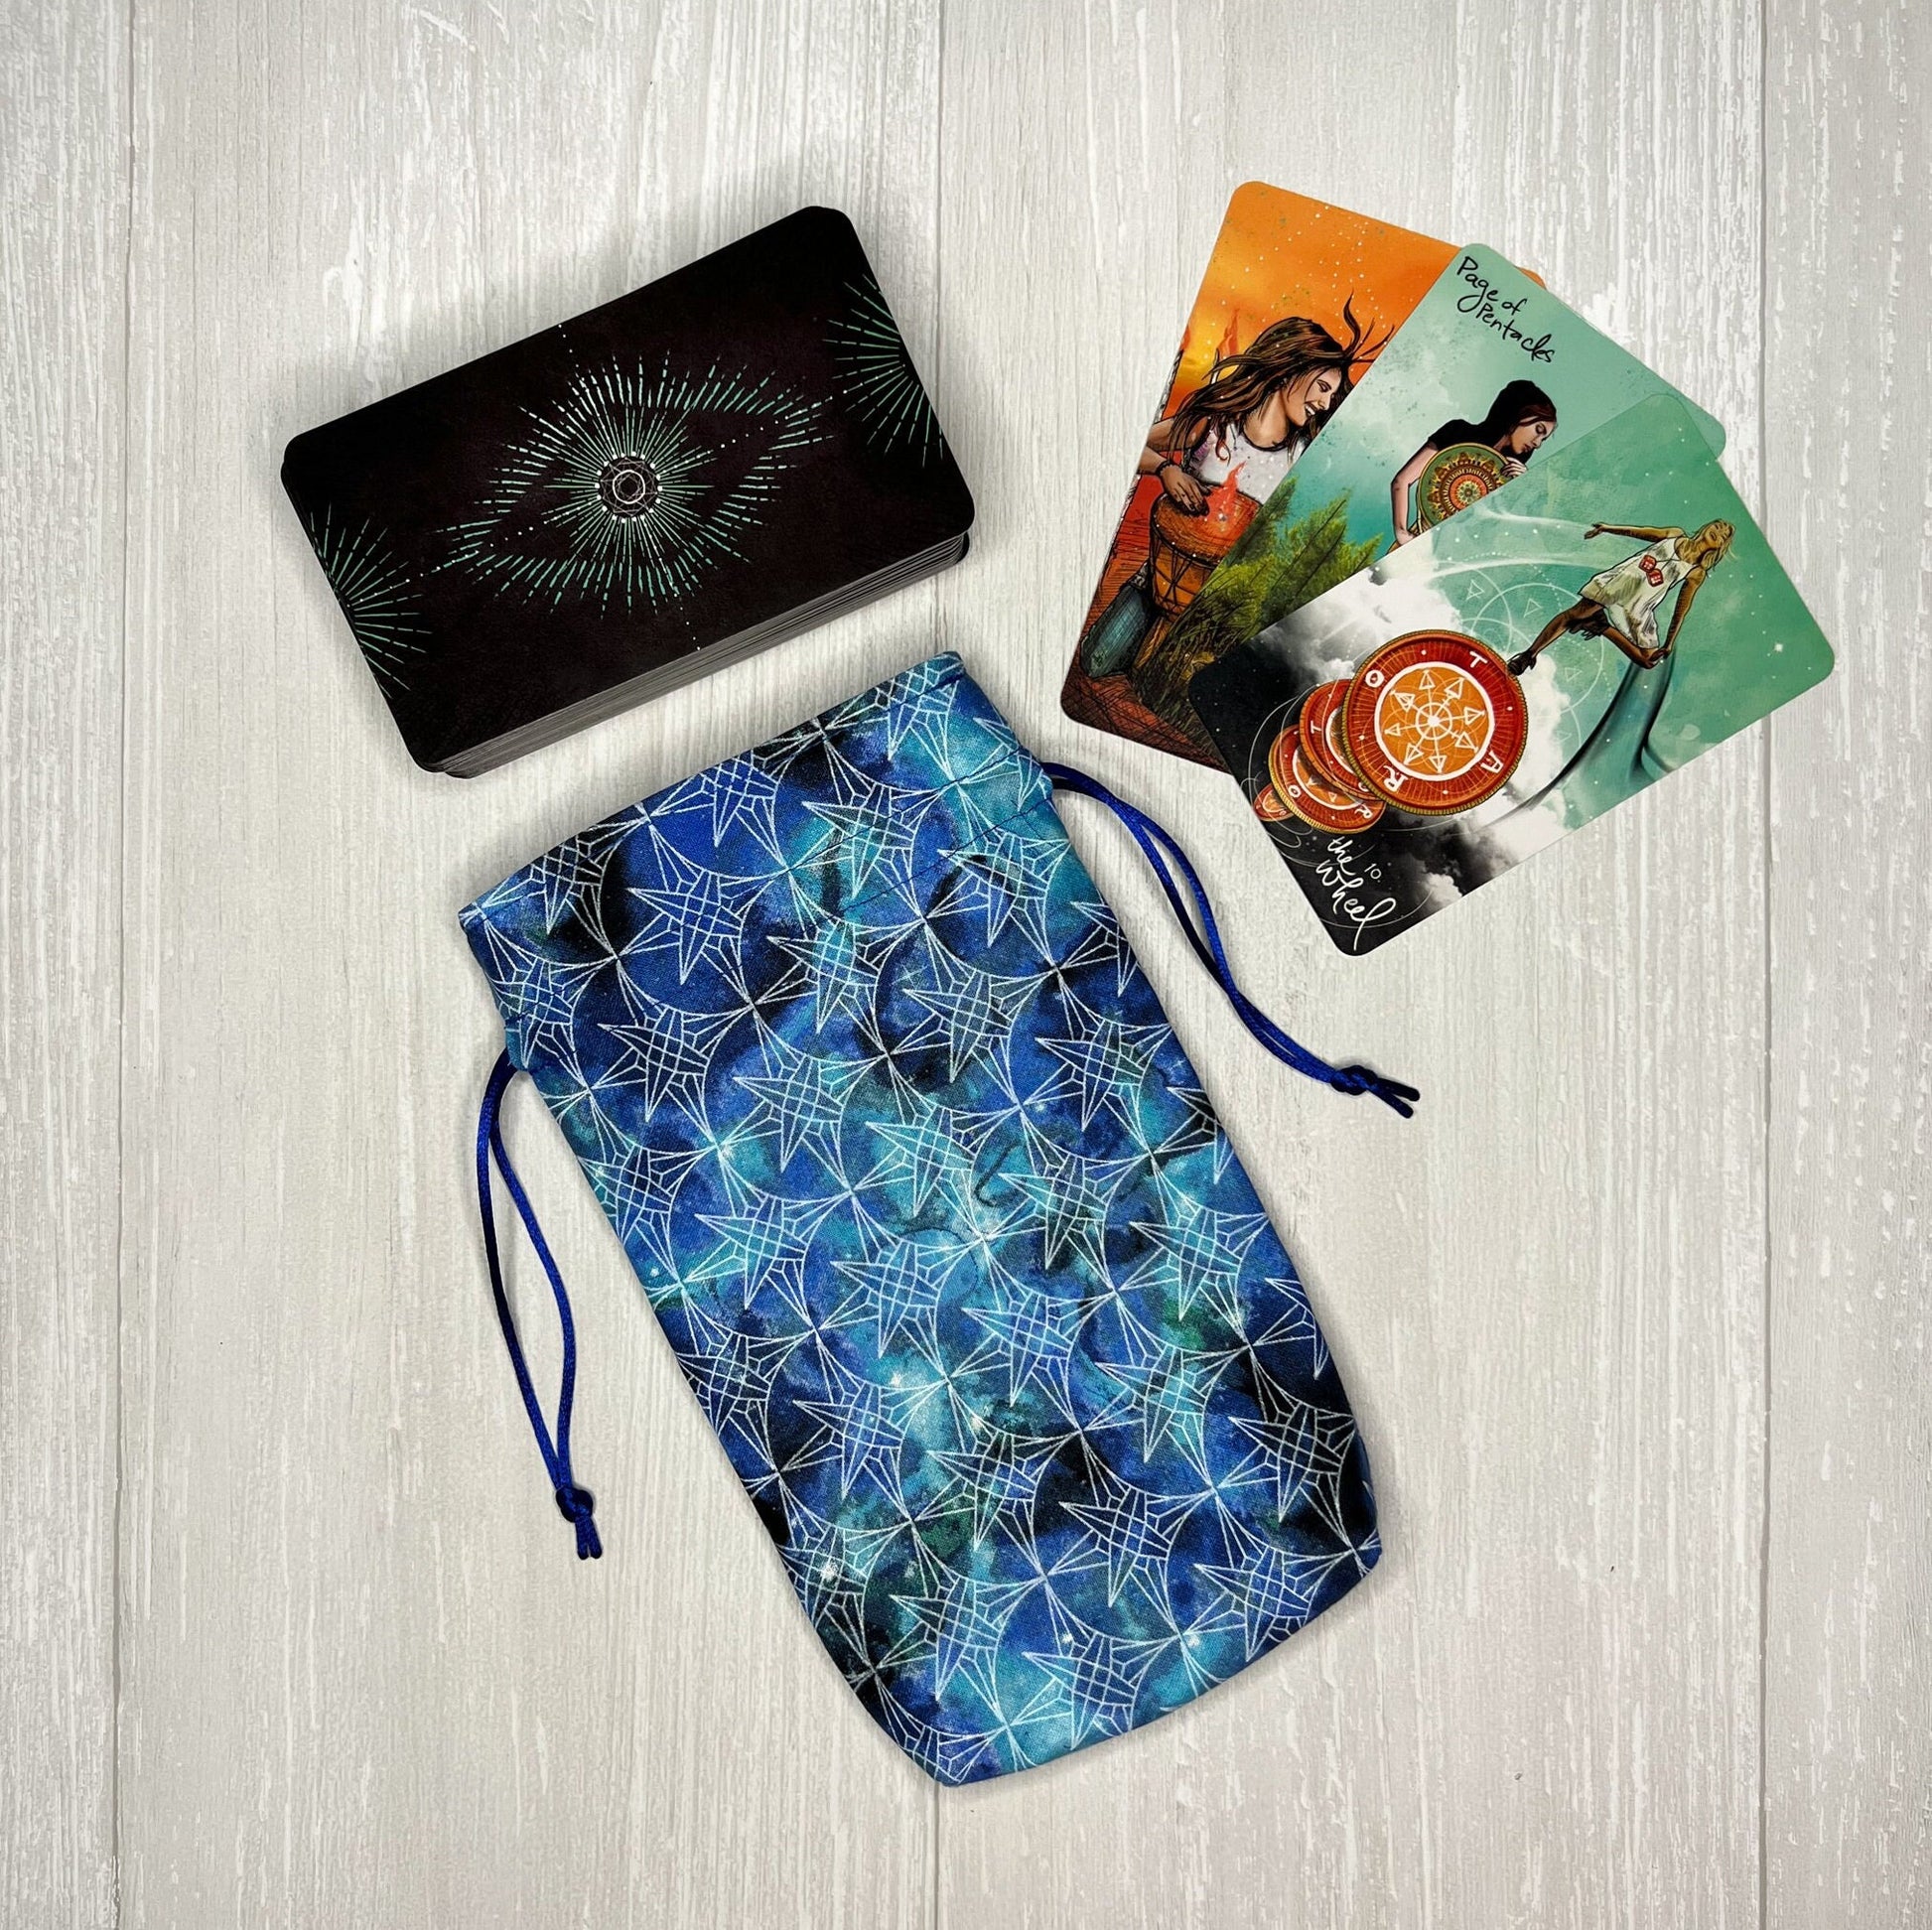 Geometric Star Tarot Bag, Drawstring Pouch, Tarot Deck Storage Holder, Standard Tarot, Pagan Witchcraft Divination Tools Gifts & Supplies